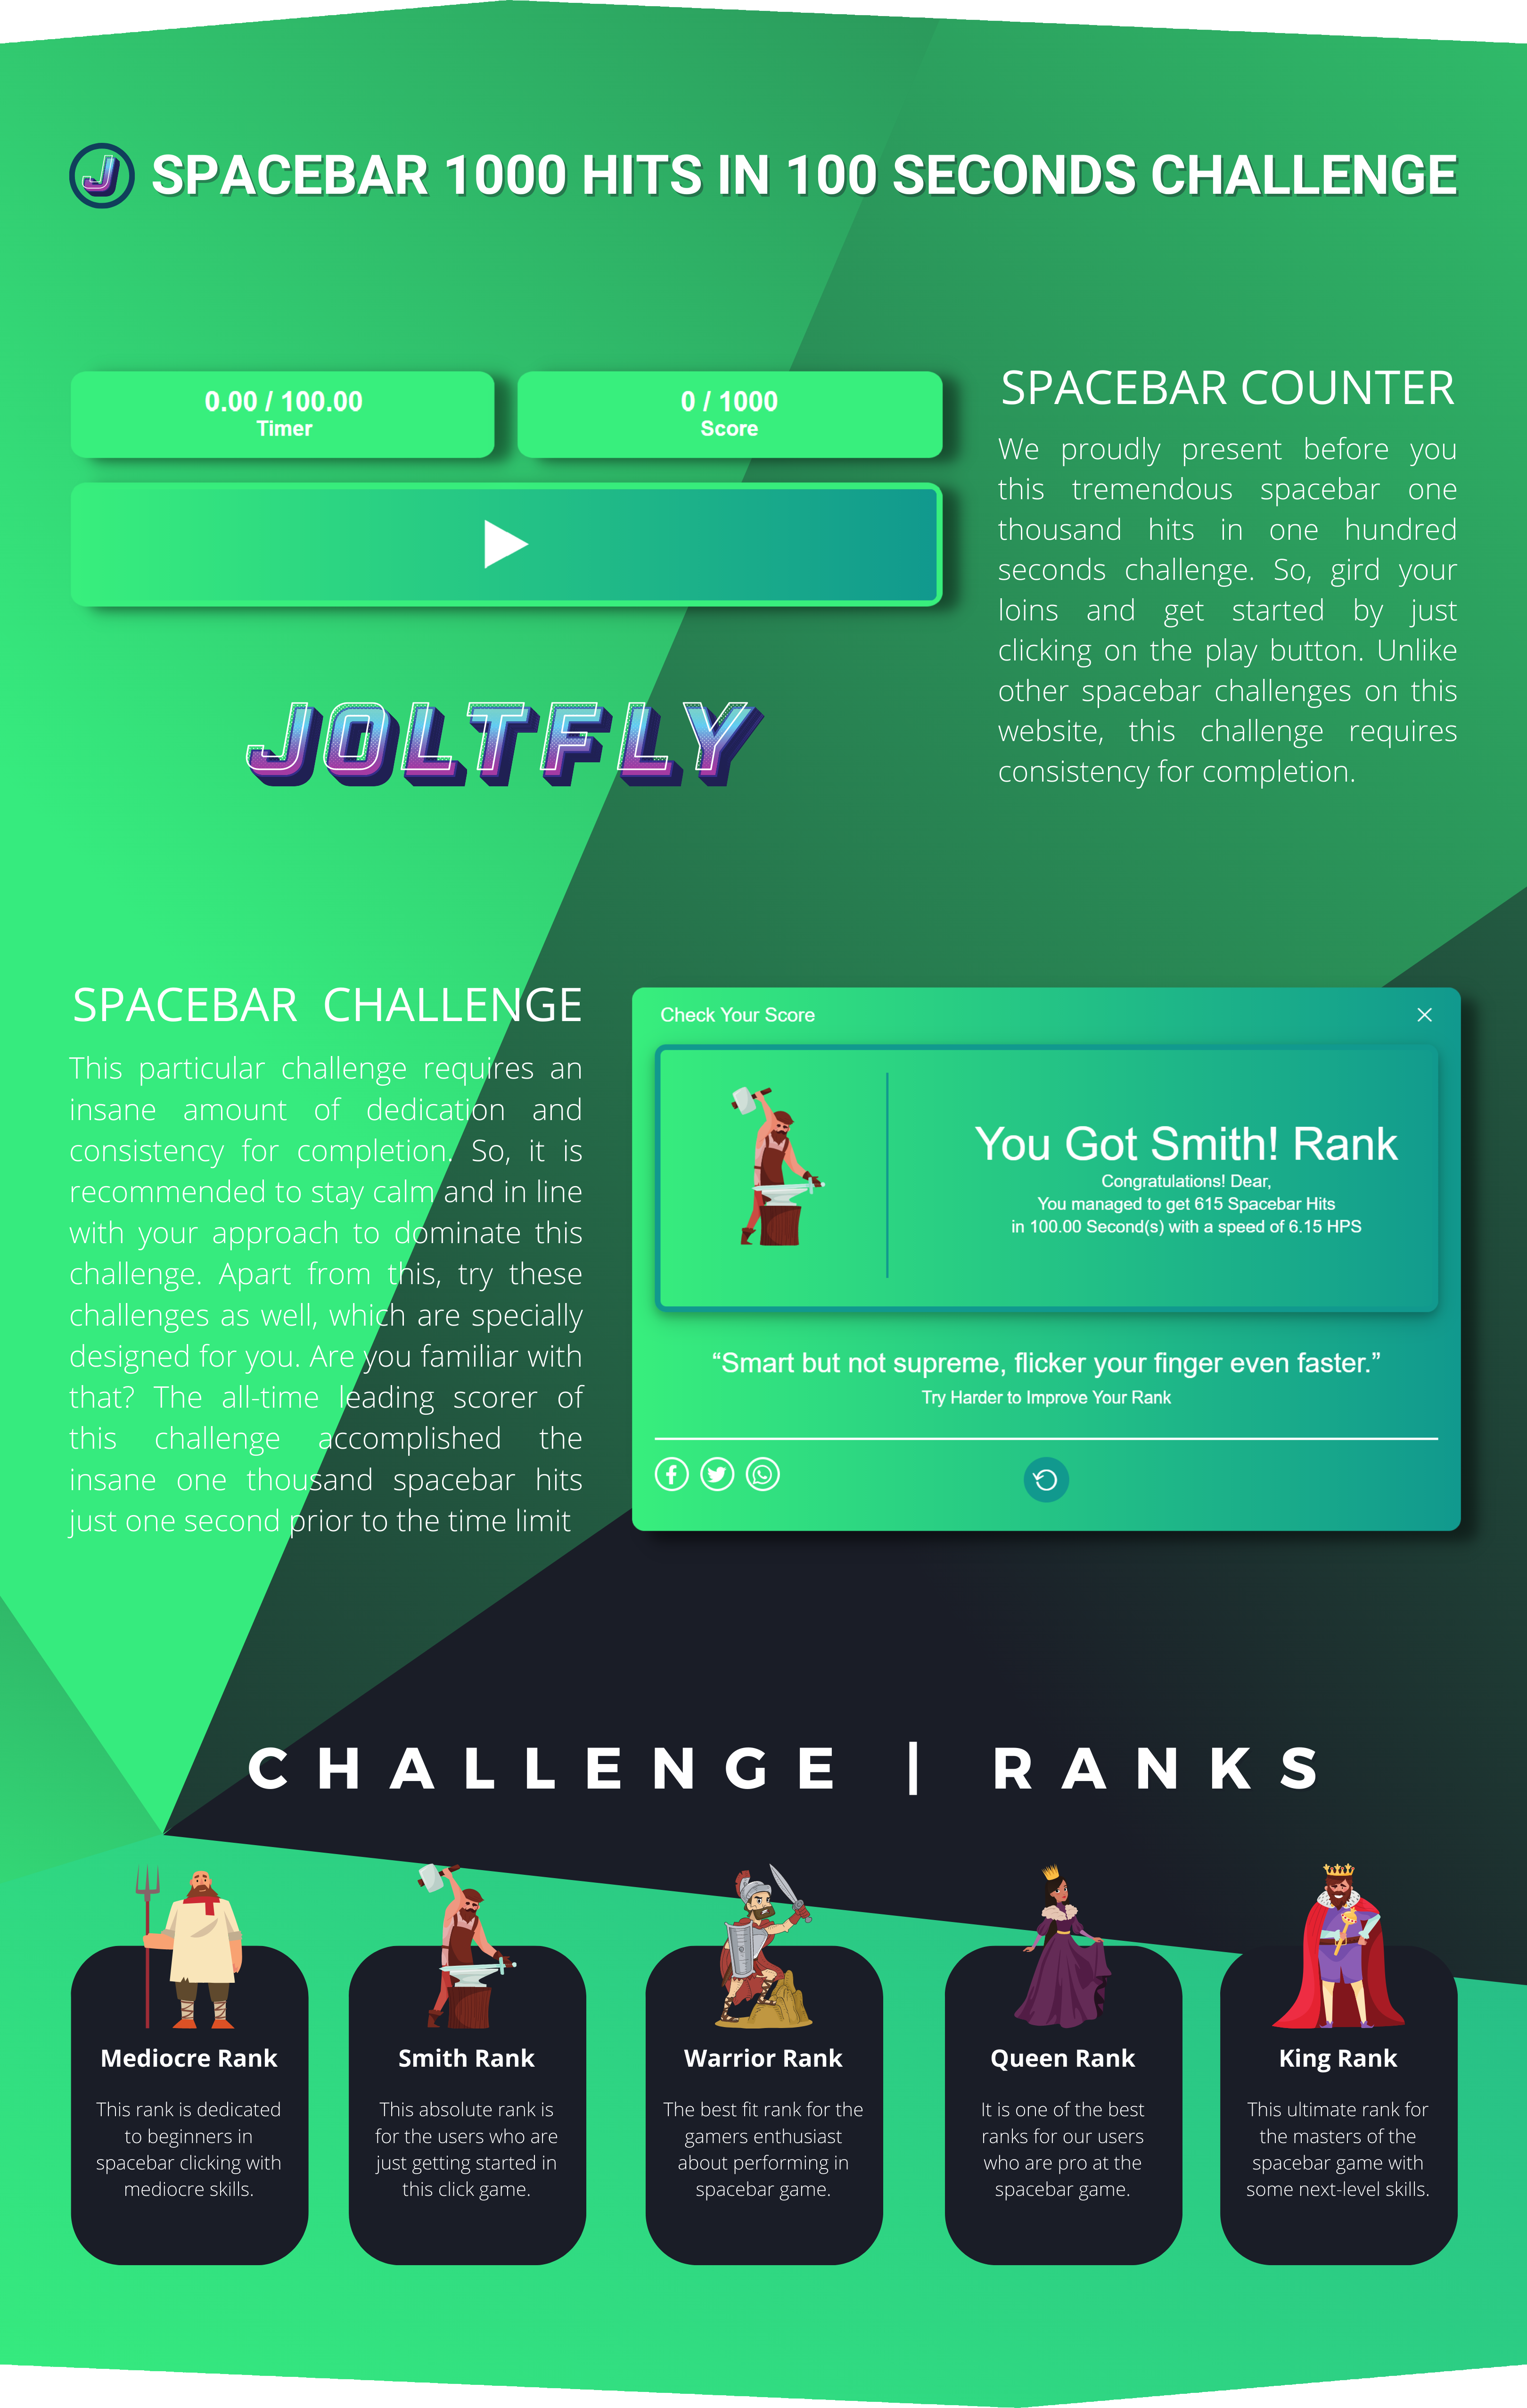 Spacebar 1000 Hits Score Challenge - Joltfly